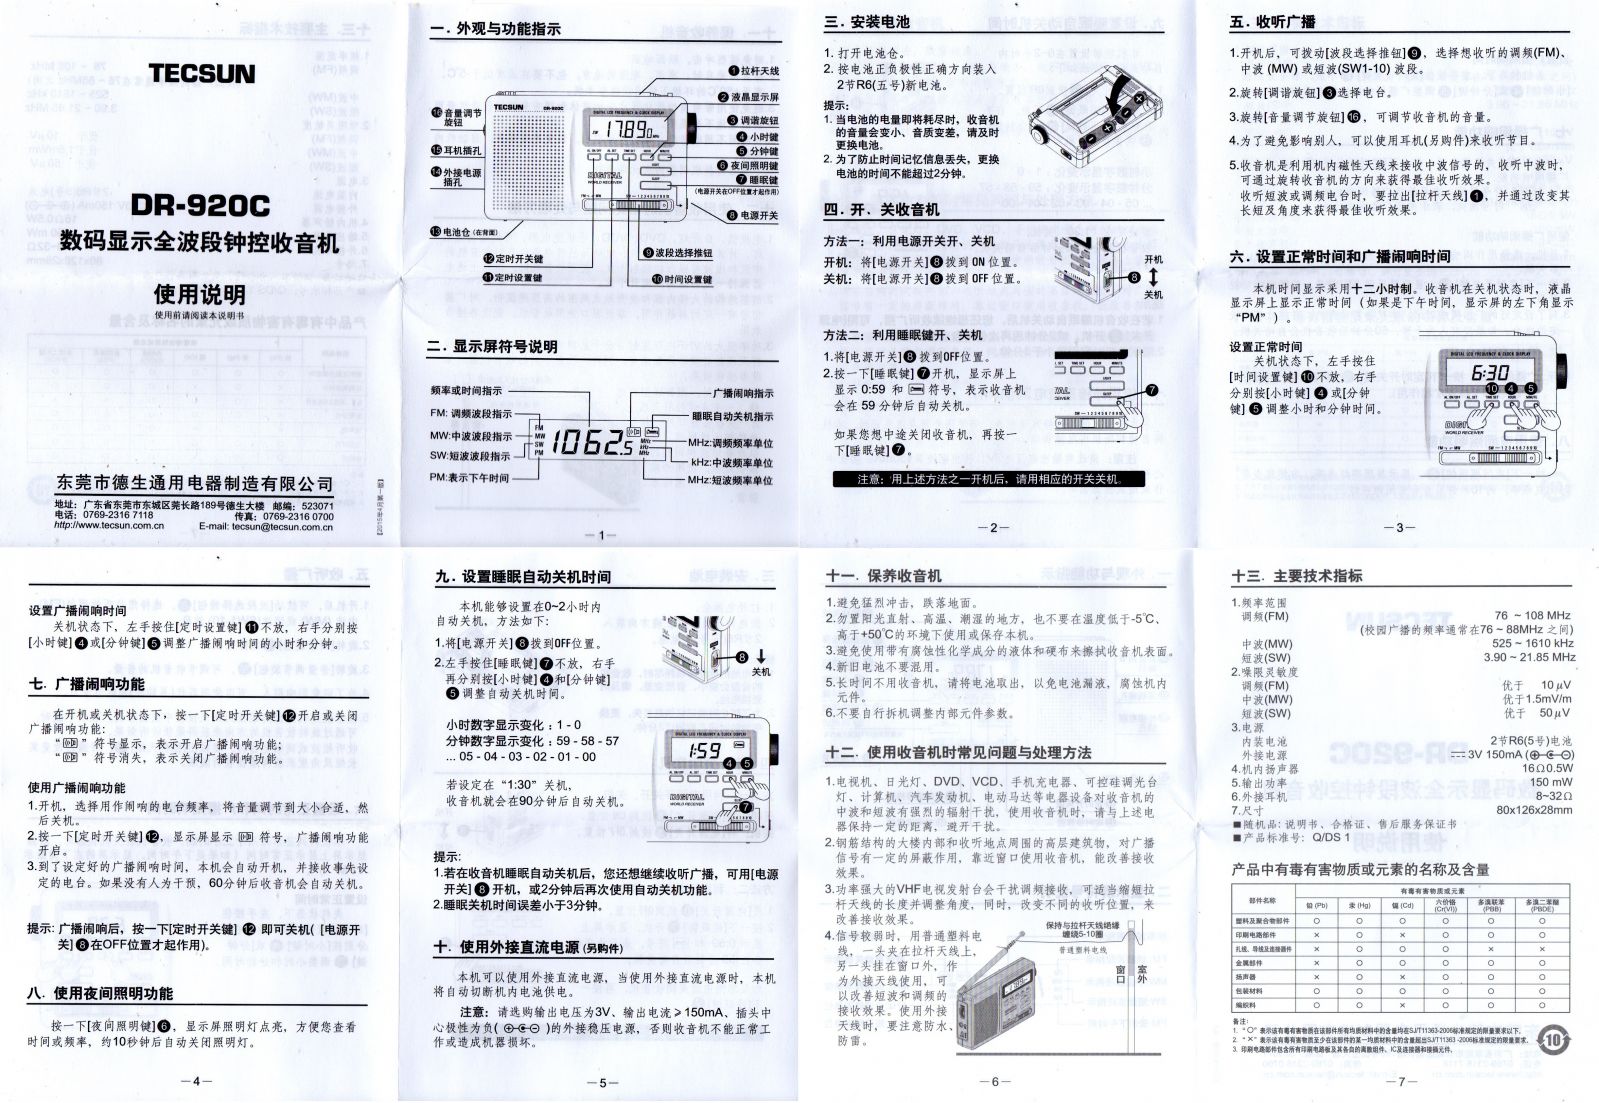 DR-920C Chinese Manual.jpg